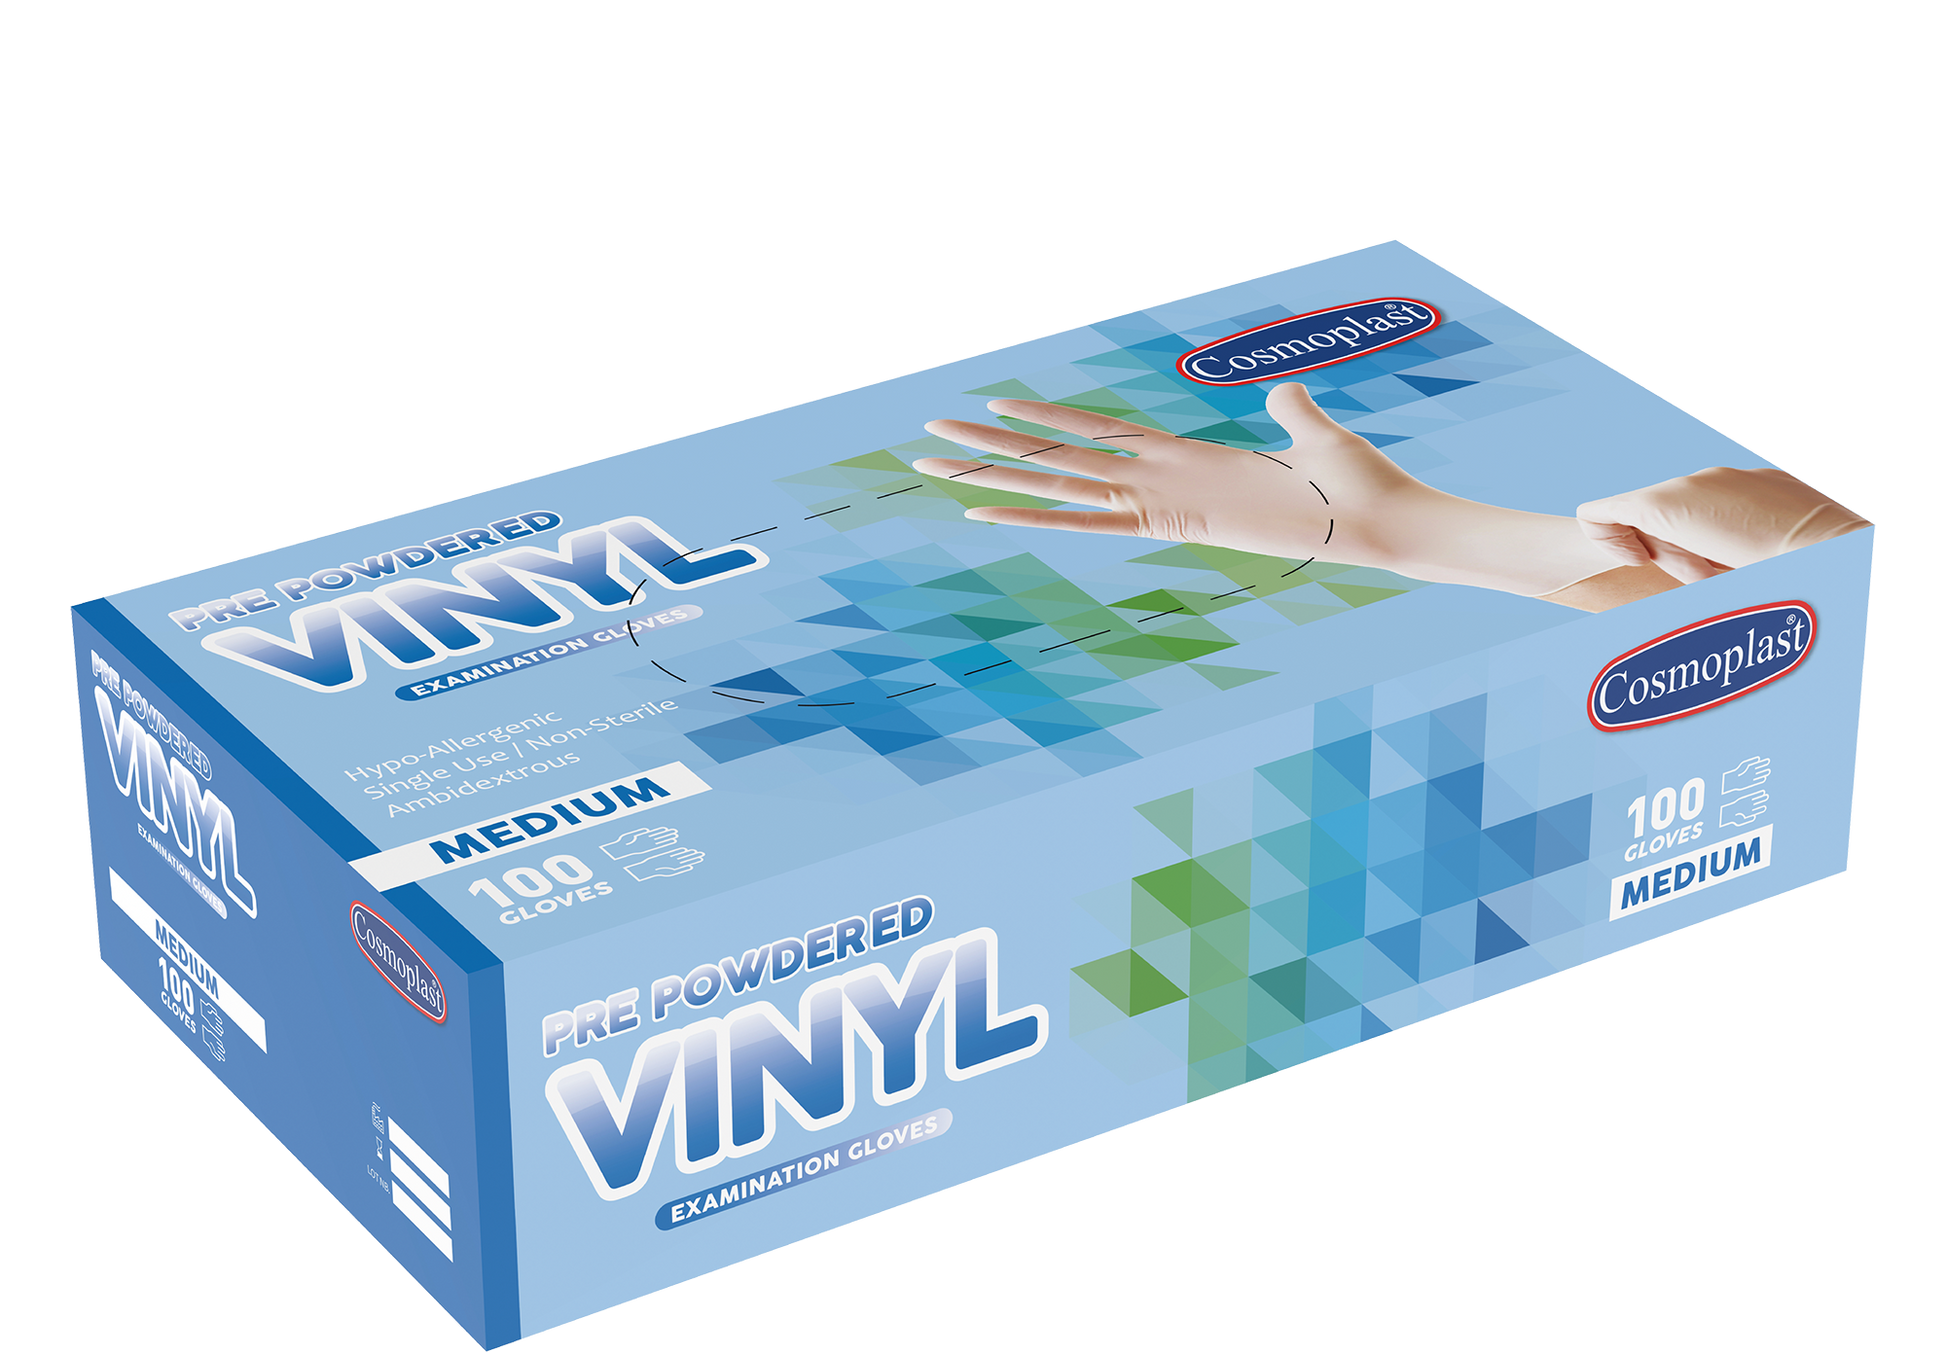 Cosmoplast Hygiene Clear Pre-powdered Vinyl Gloves Medium 100 Pcs